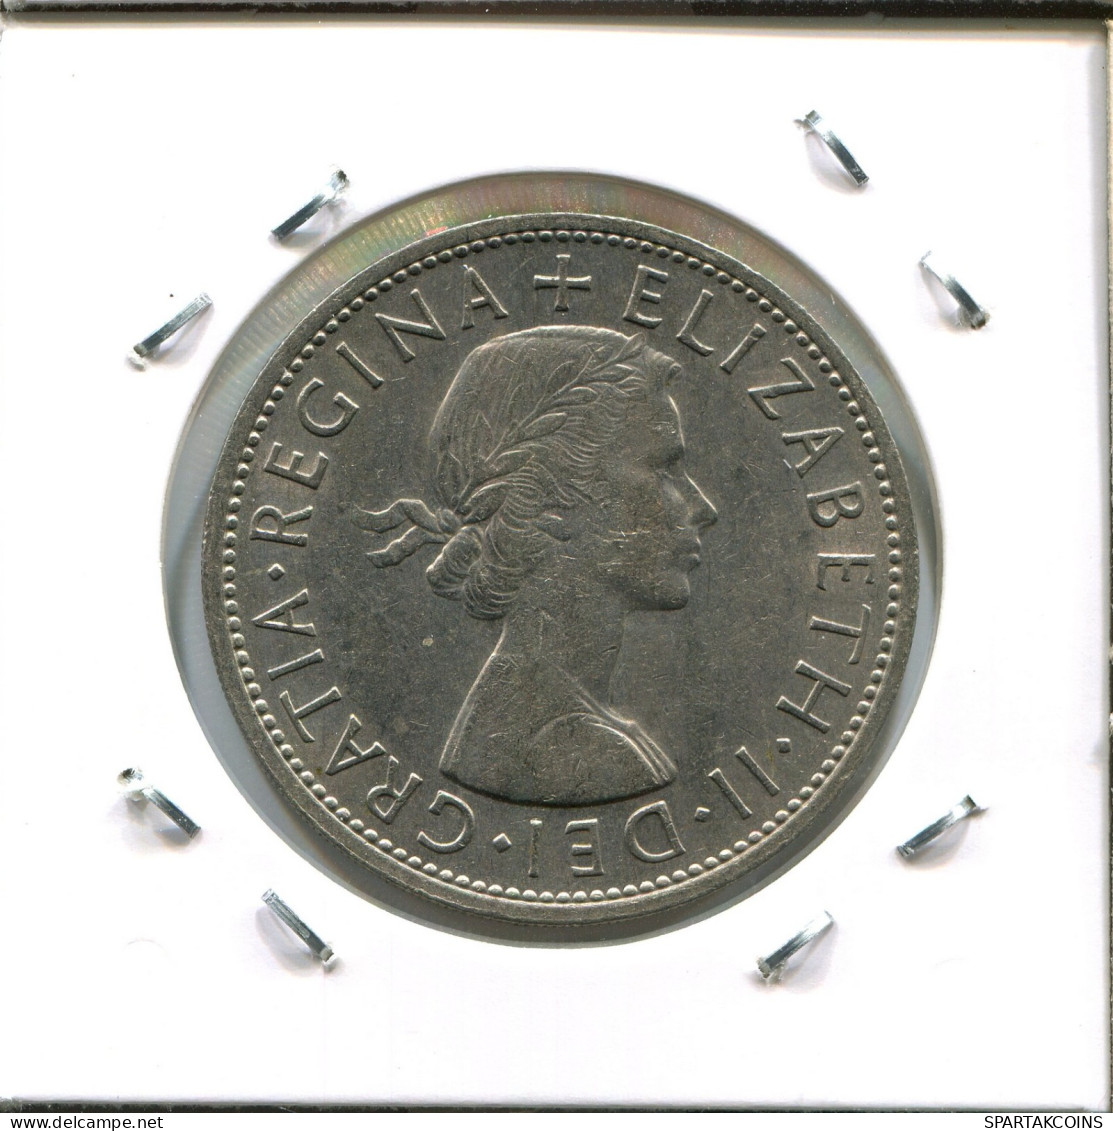 2 SHILLINGS 1961 UK GREAT BRITAIN Coin #AW541.U.A - J. 1 Florin / 2 Shillings